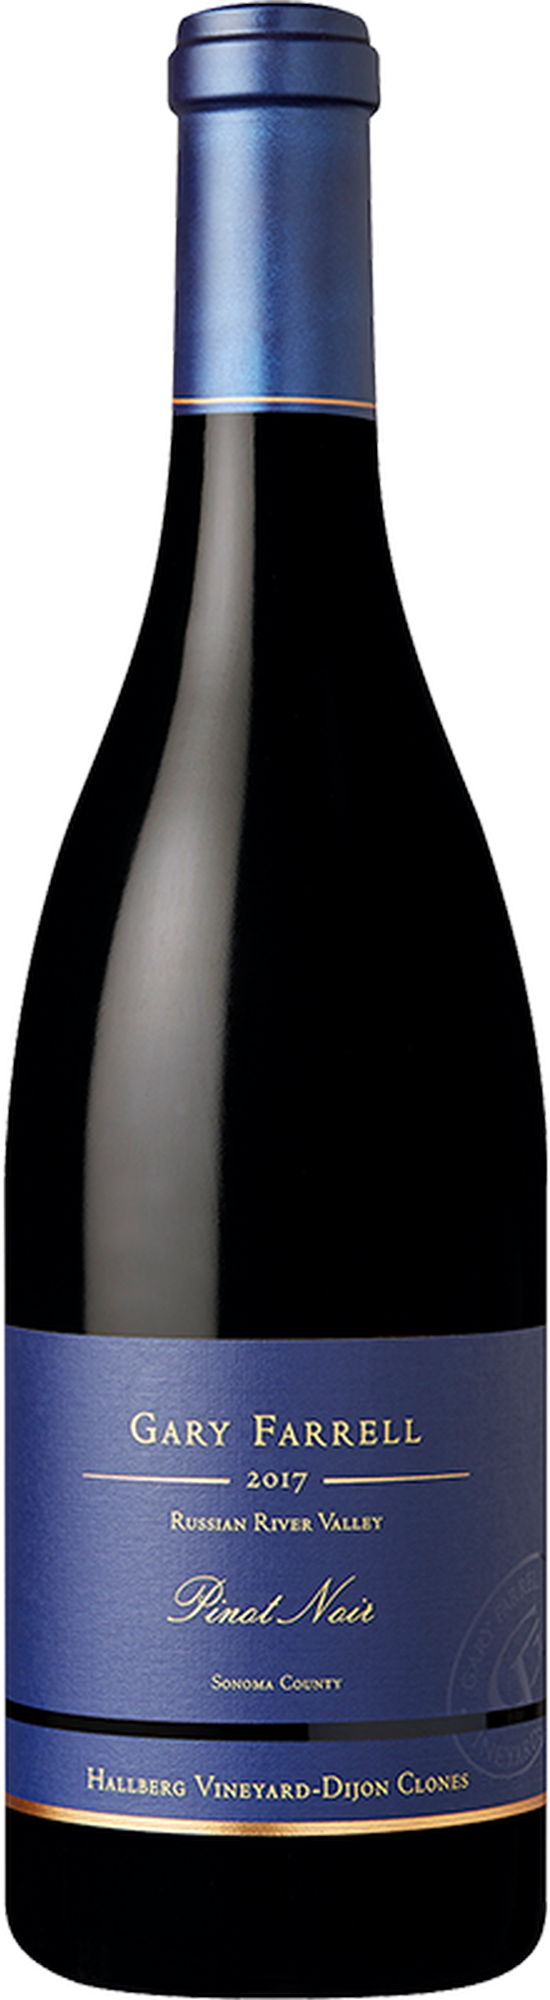 2017 Hallberg Vineyard Dijon Clones Pinot Noir